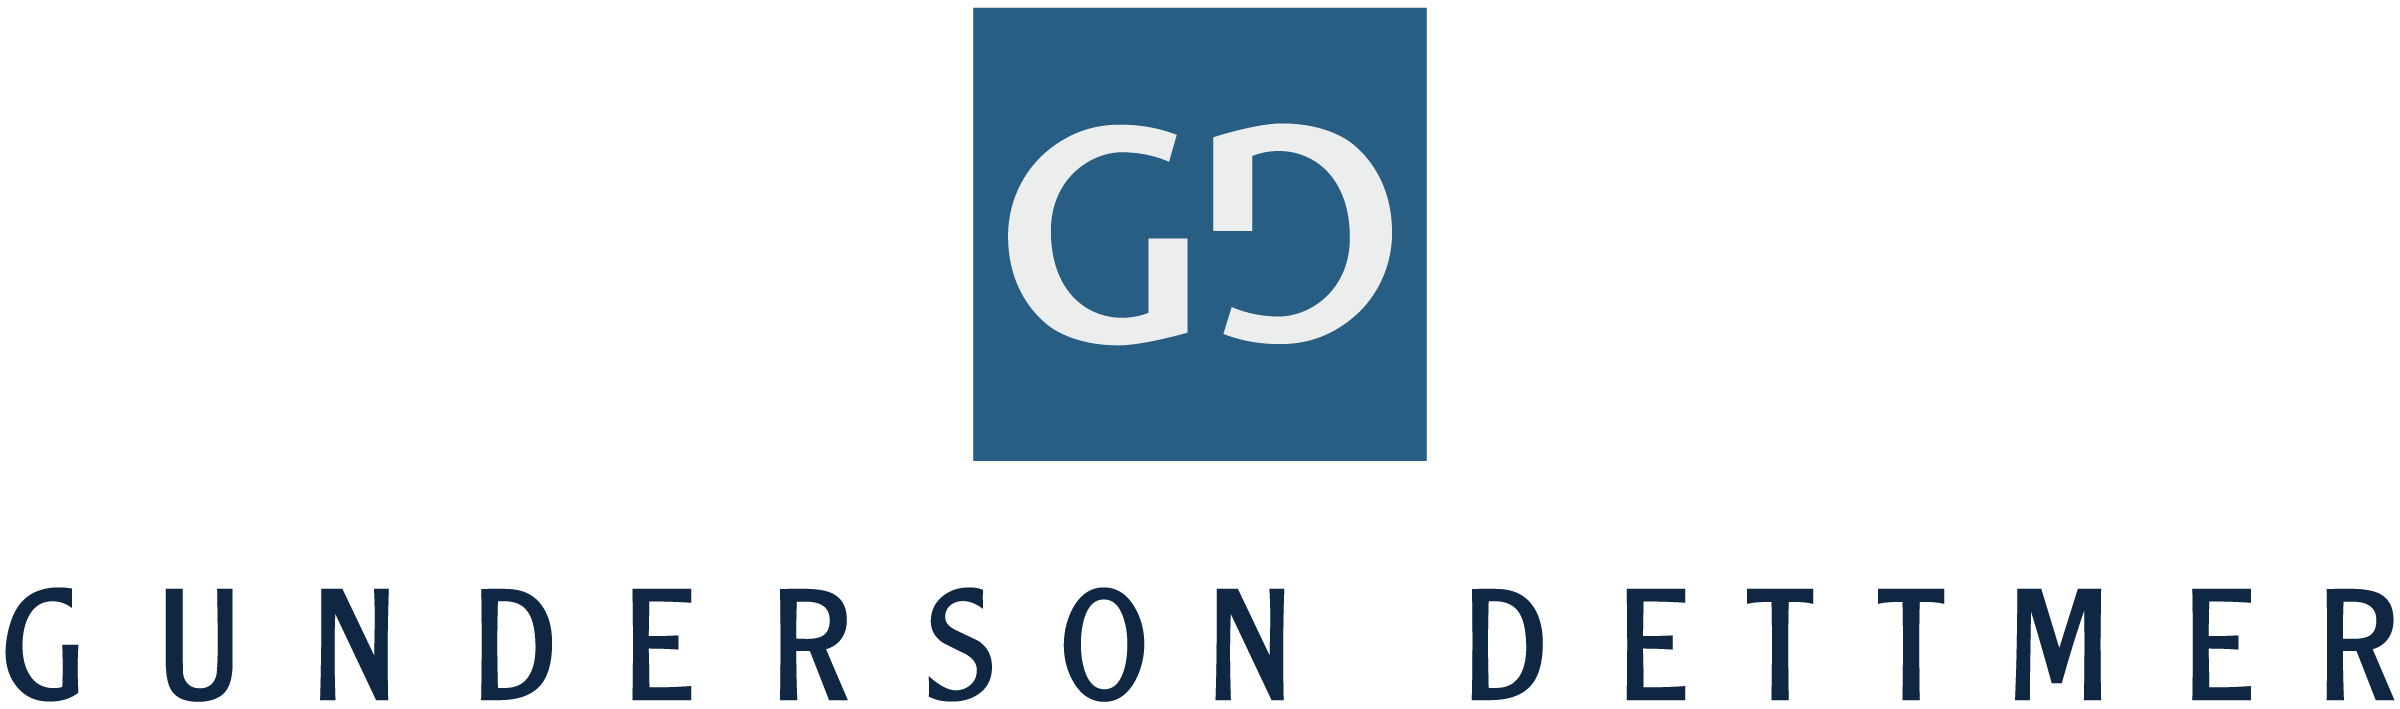 Gunderson Dettmer Singapore Llp company logo